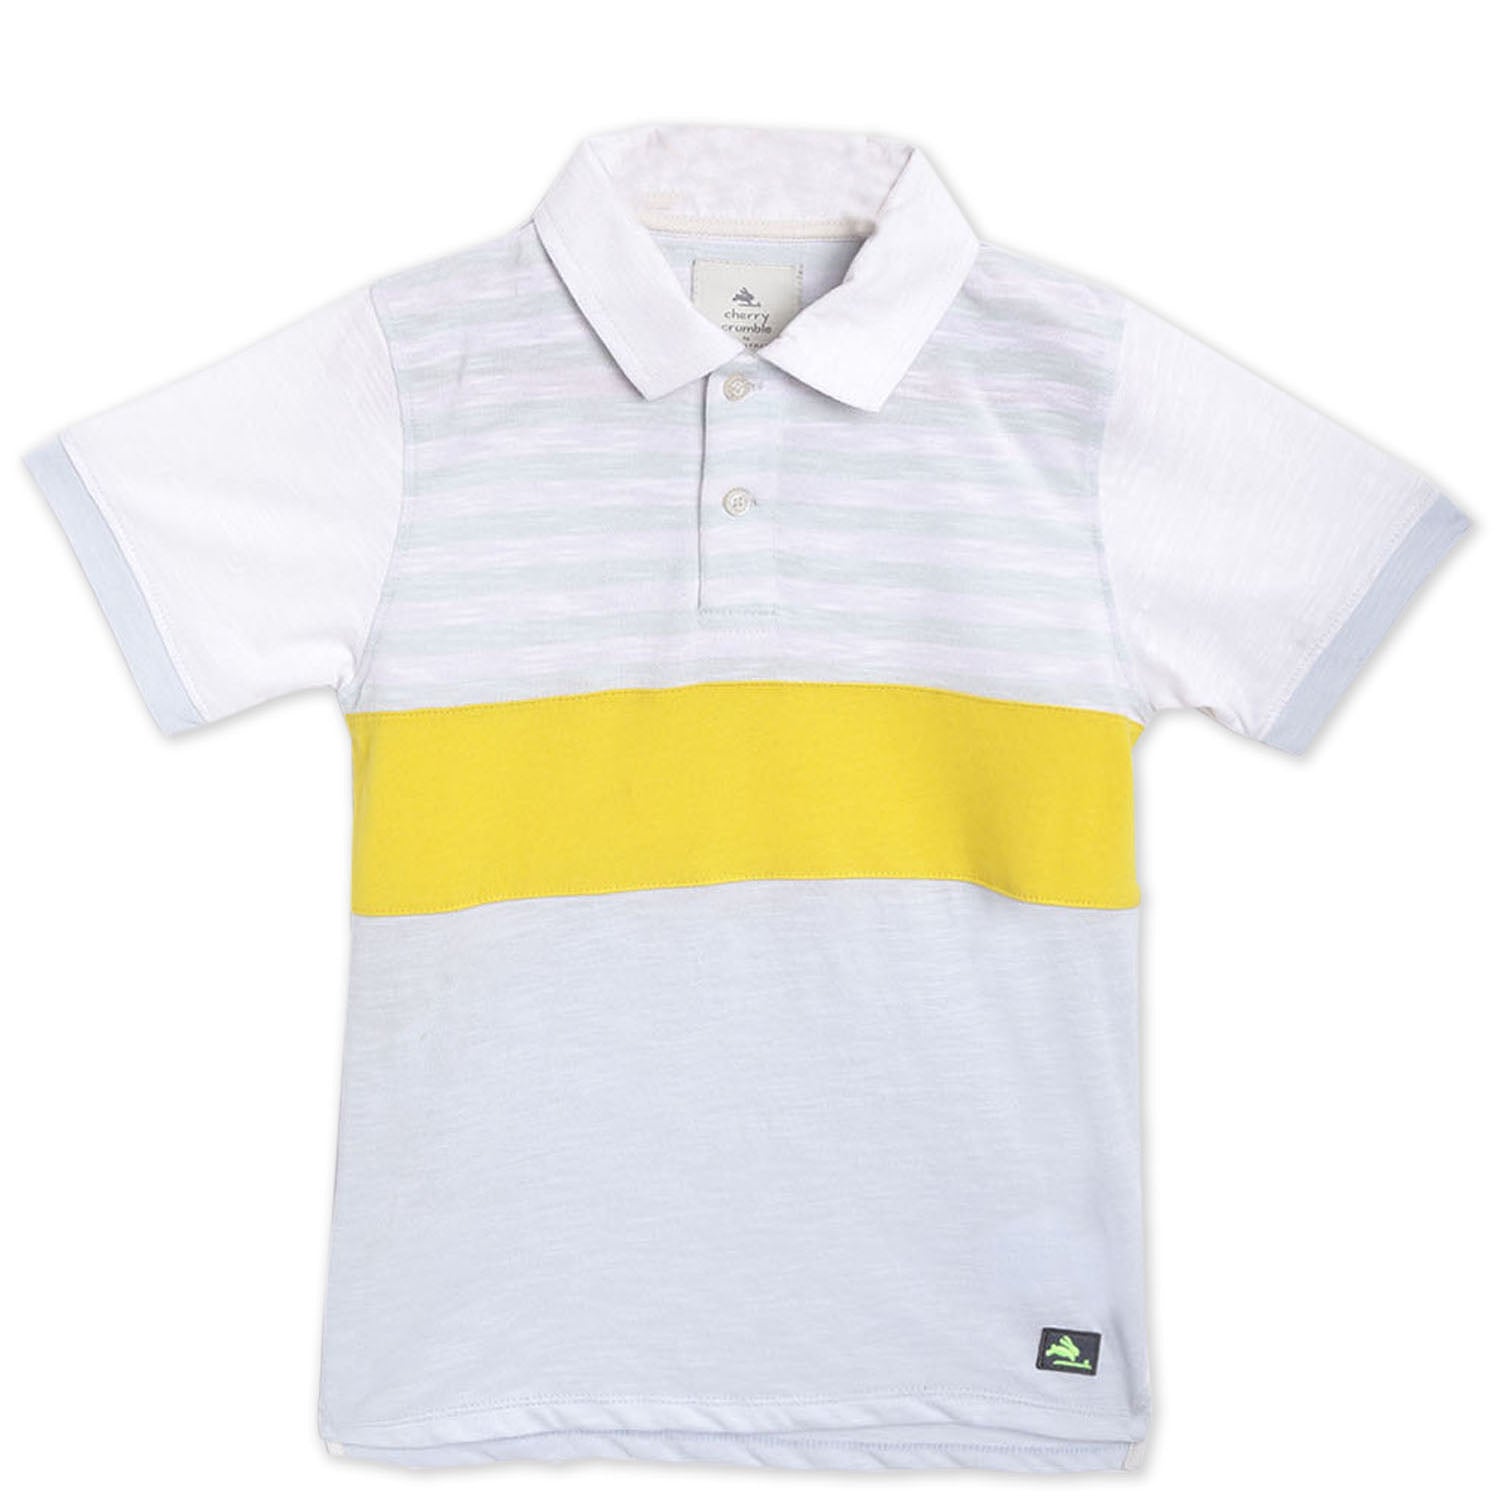 Sunny-Polo-Tshirt